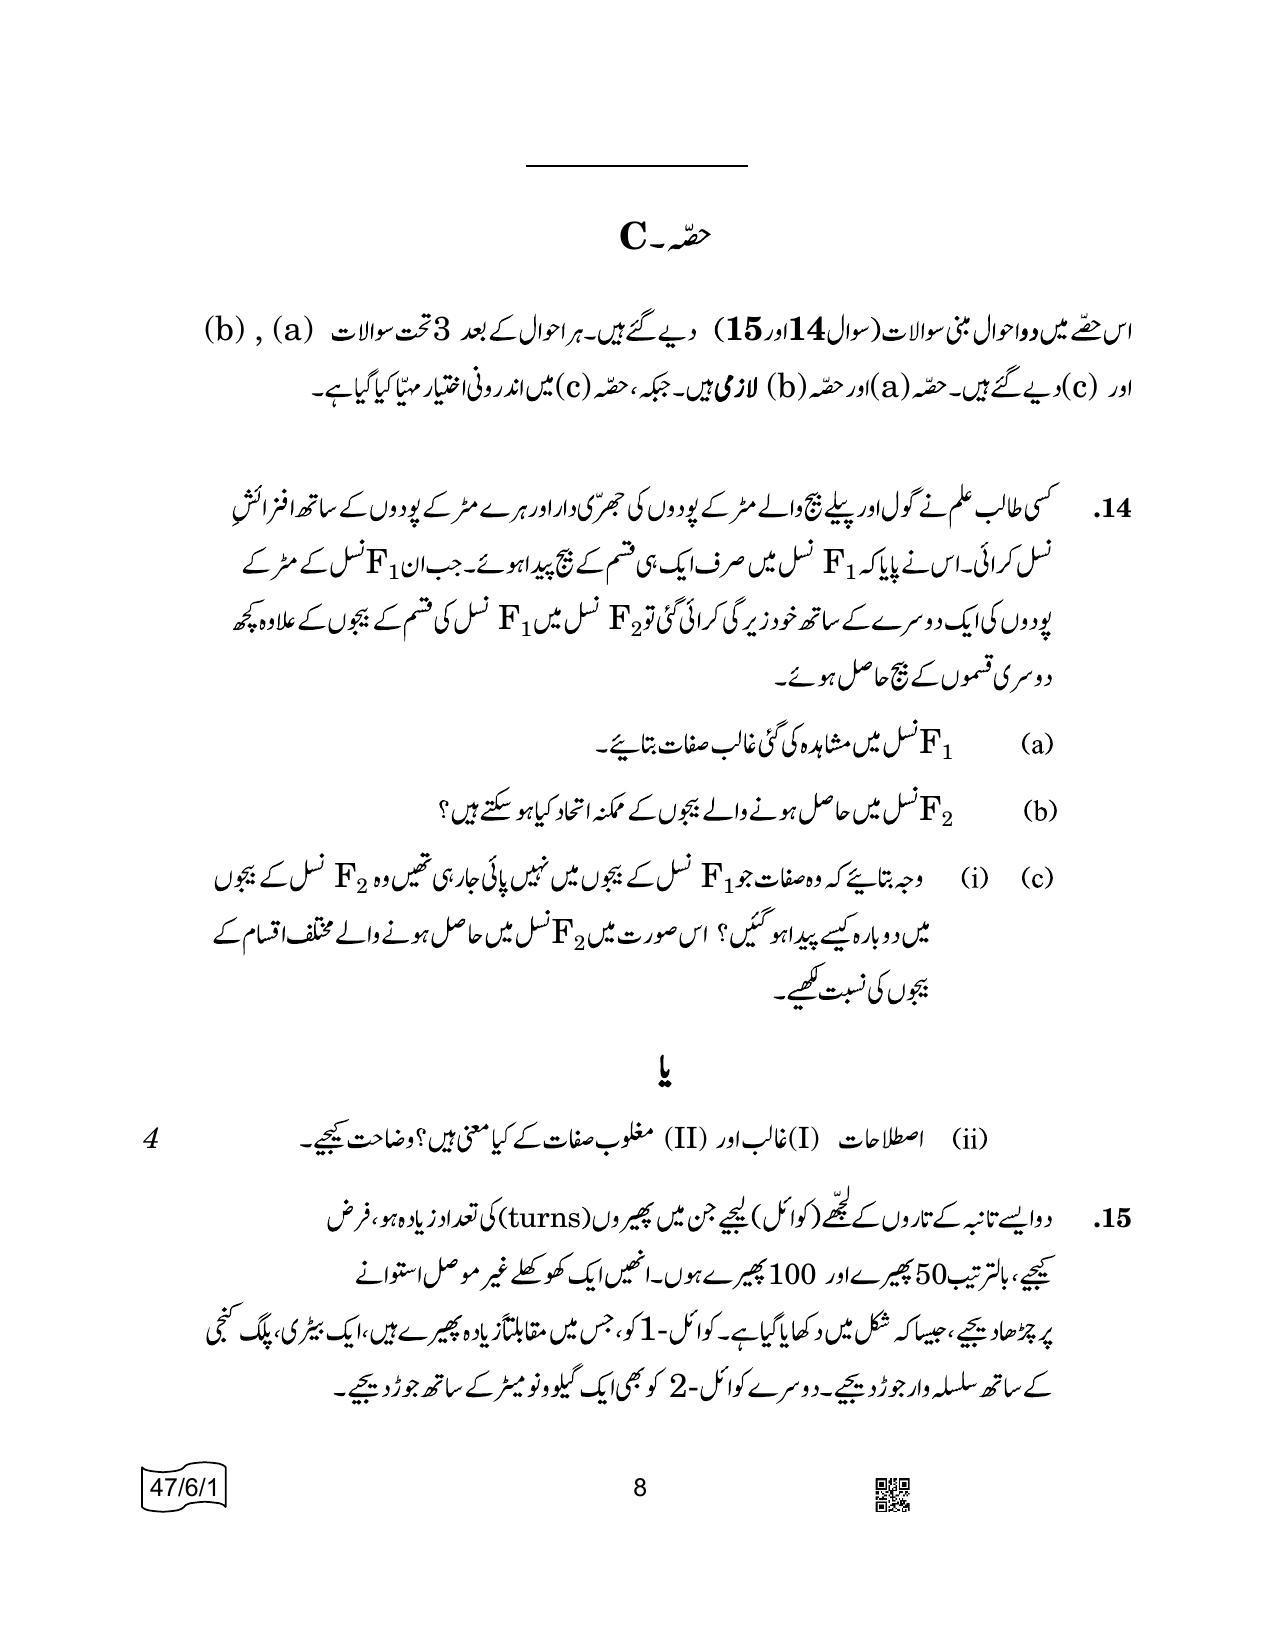 CBSE Class 10 47-6-1 SCIENCE Urdu 2022 Compartment Question Paper - Page 8